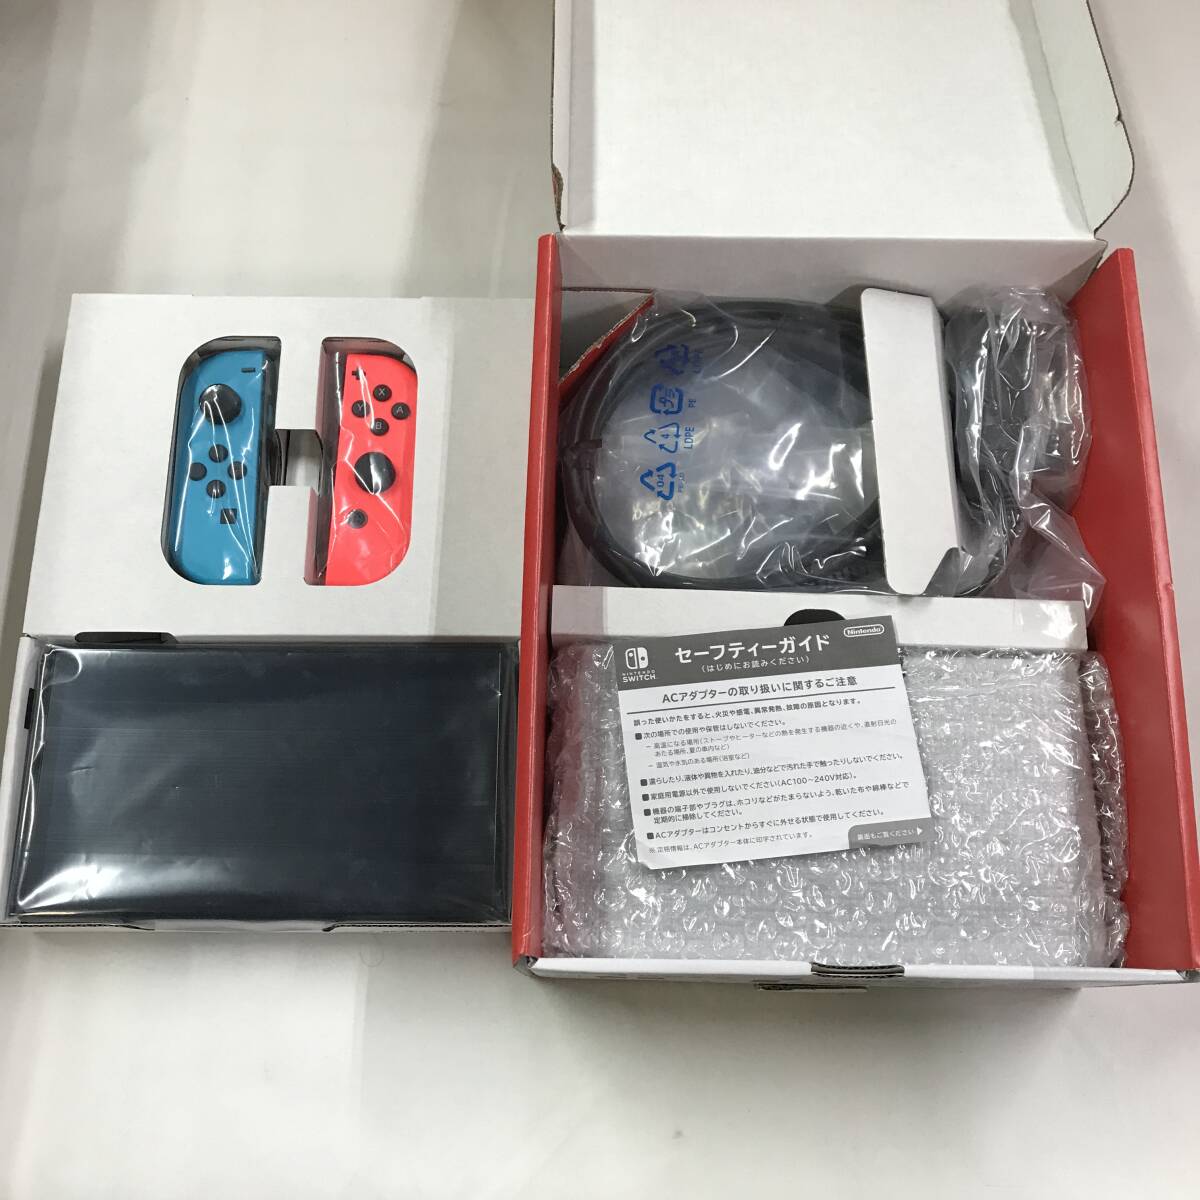 gb2144 free shipping! operation goods Nintendo switch body Nintendo Switch Joy-Con(L) neon blue /(R) red have machine EL model 